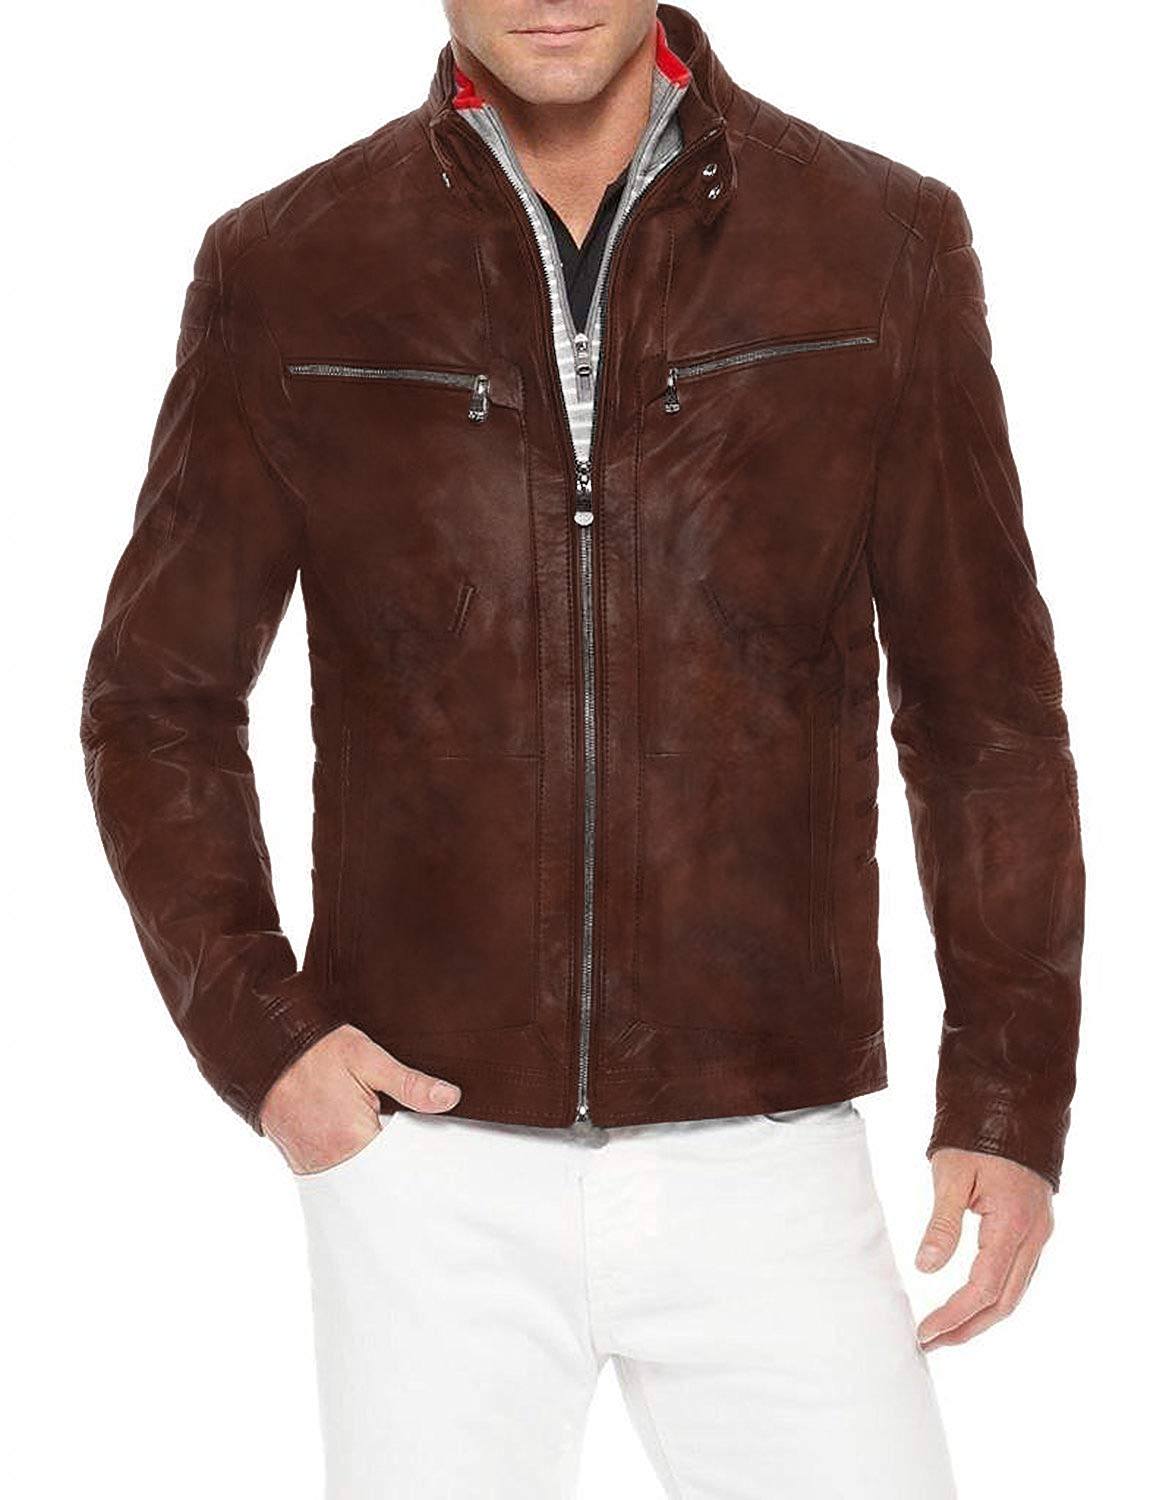 Leather Jackets Hub Mens Genuine Lambskin Leather Jacket (Black, Racer Jacket) - 1501156